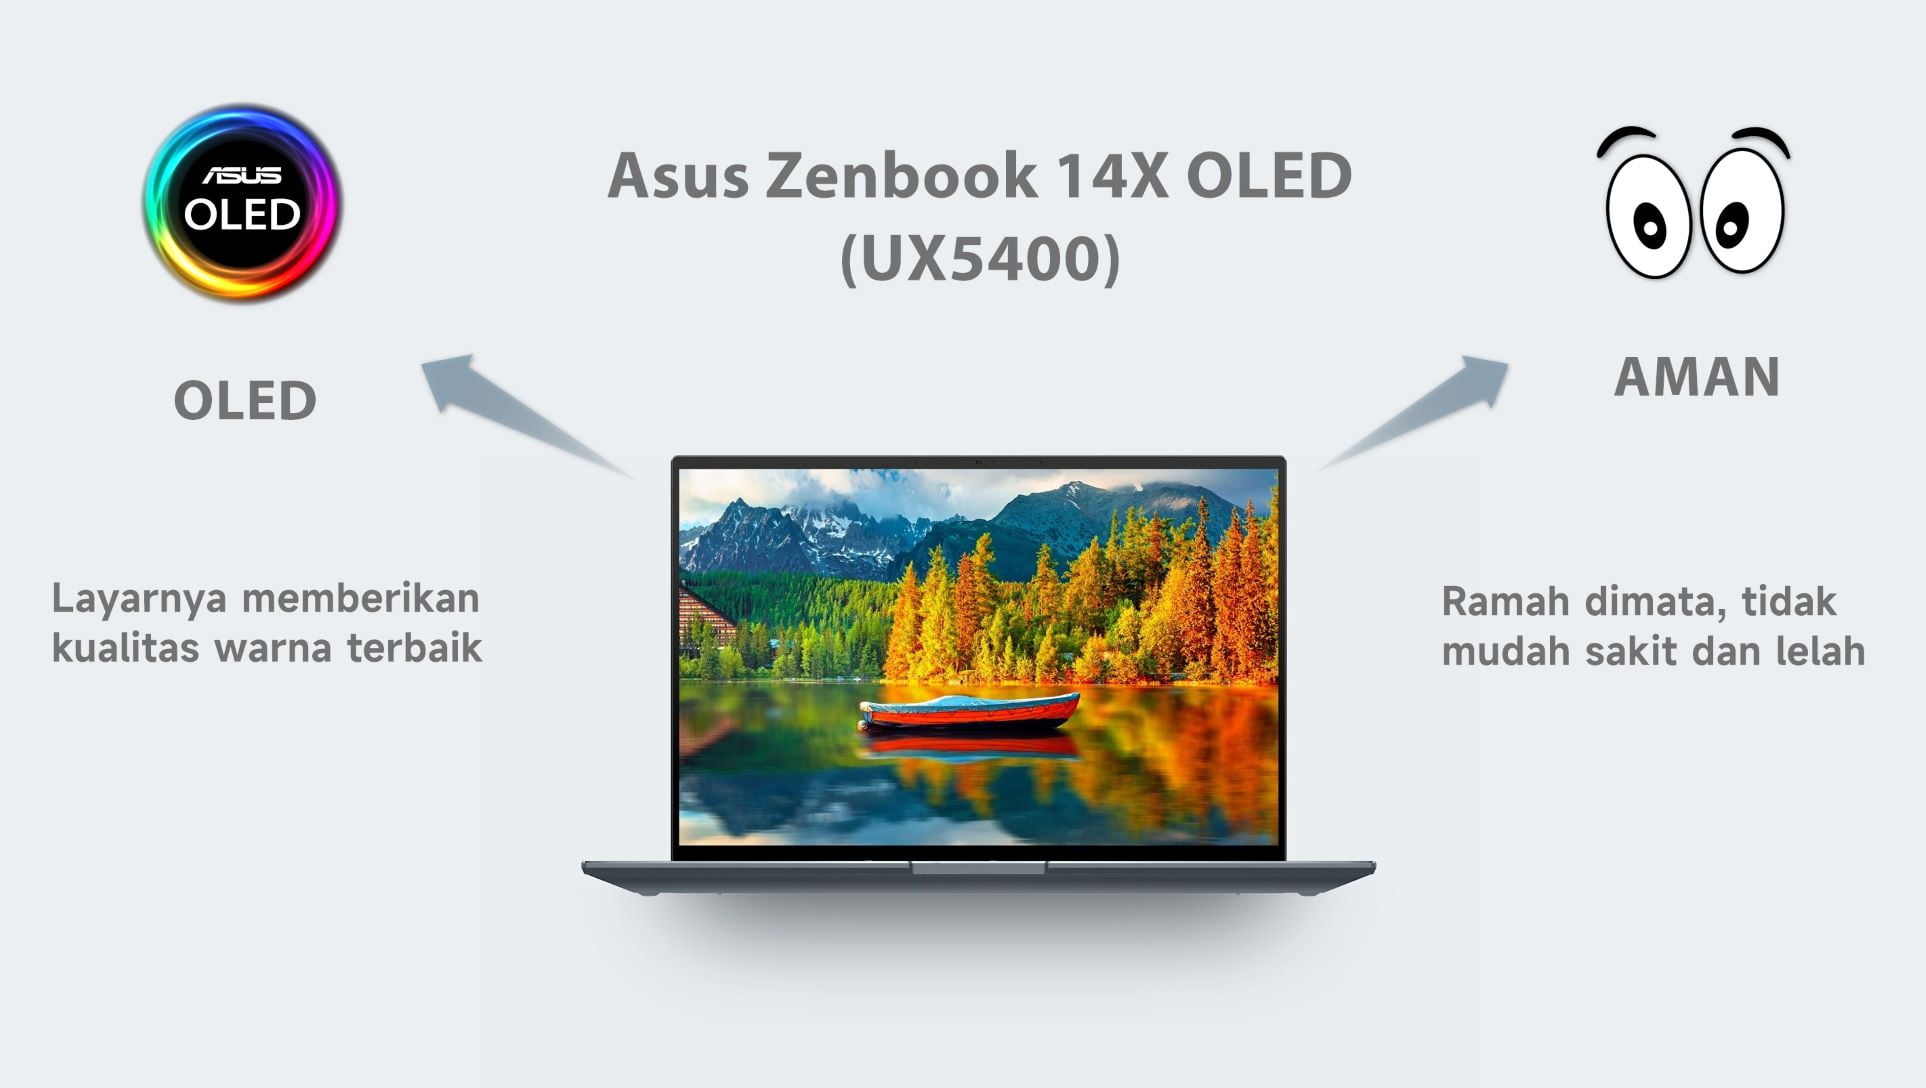 ASUS Zenbook 14X OLED display hdr mata aman